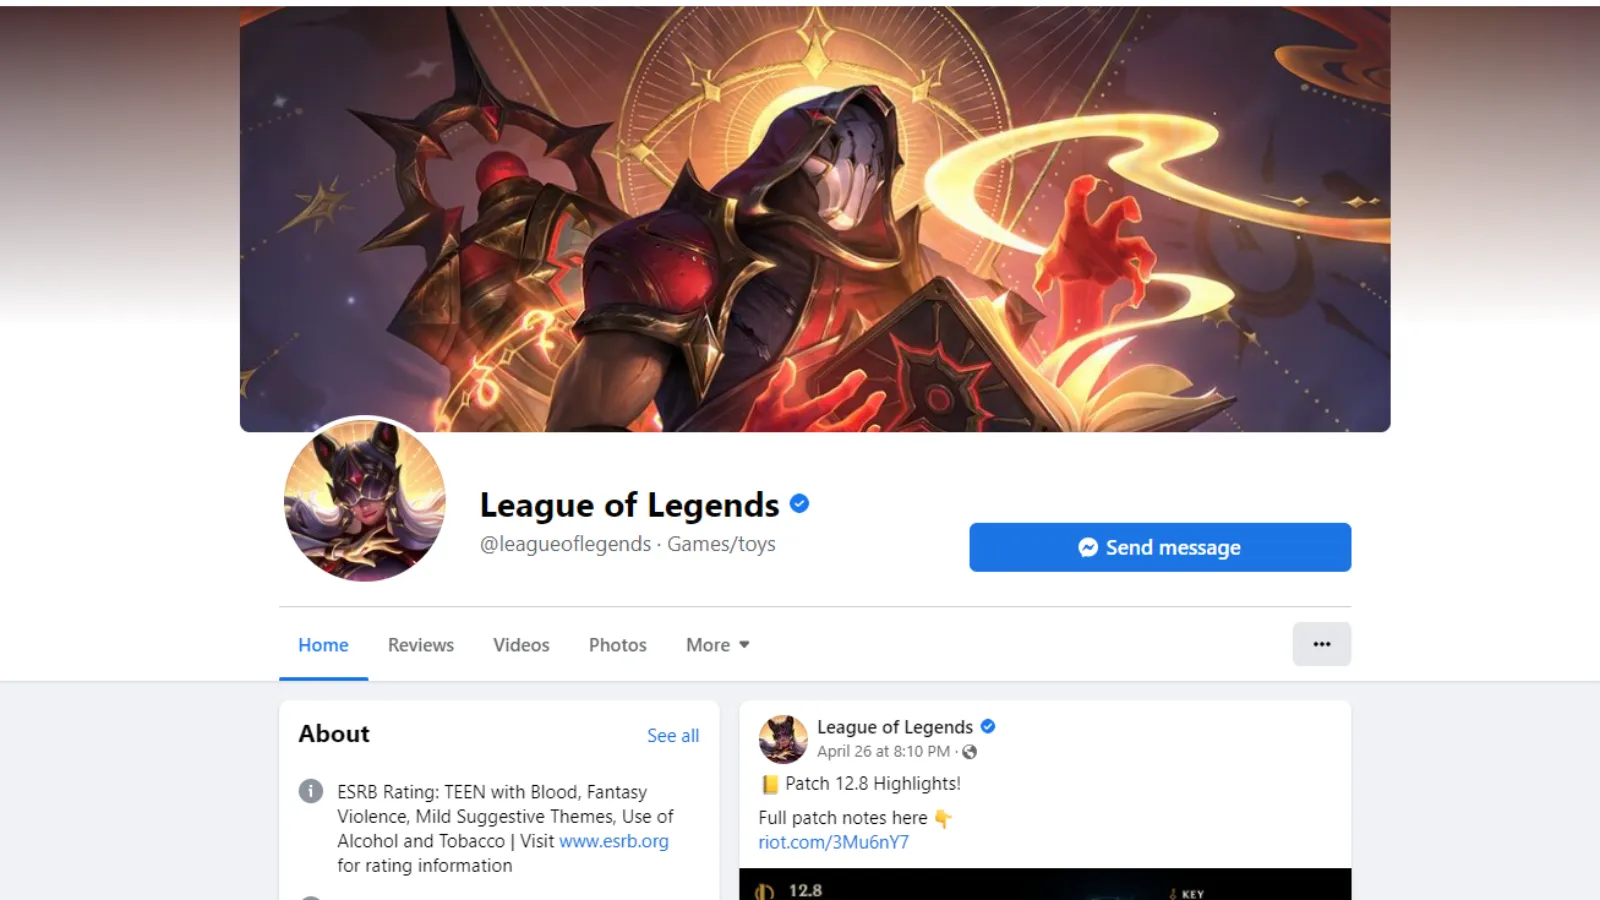 League of Legends - Official Facebook Account